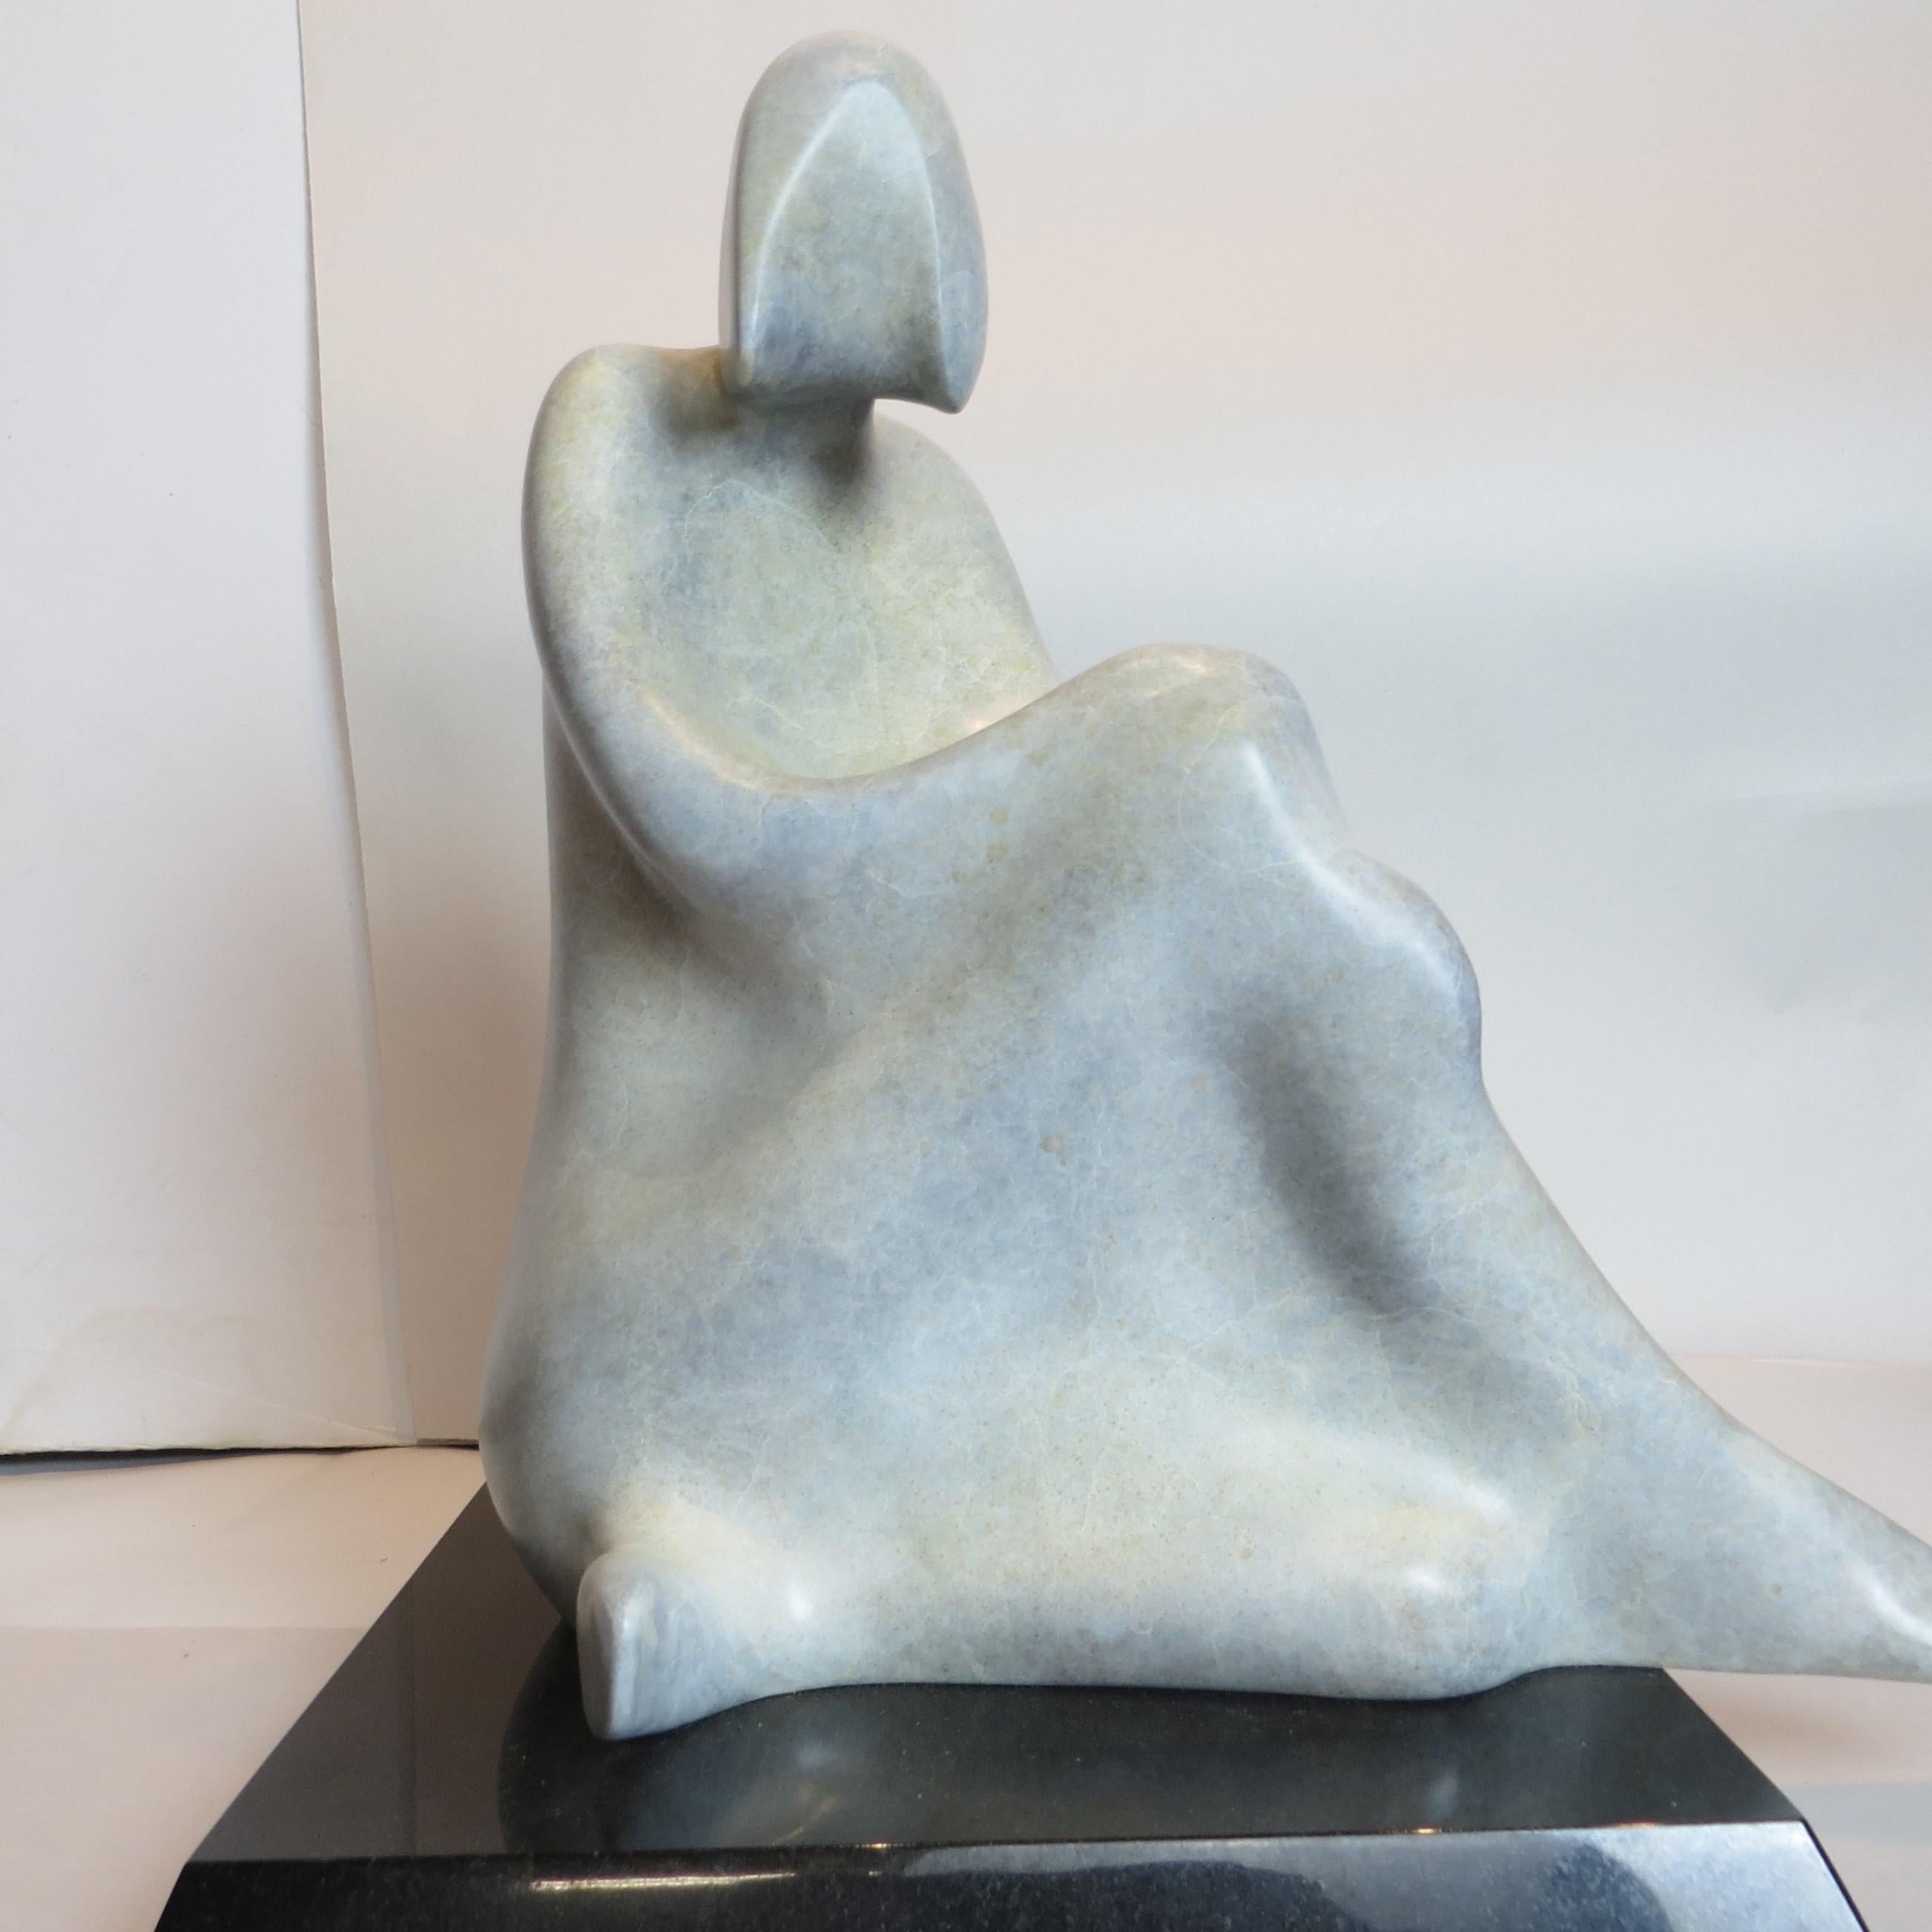 Rachel  - Sculpture by Robert Kelly